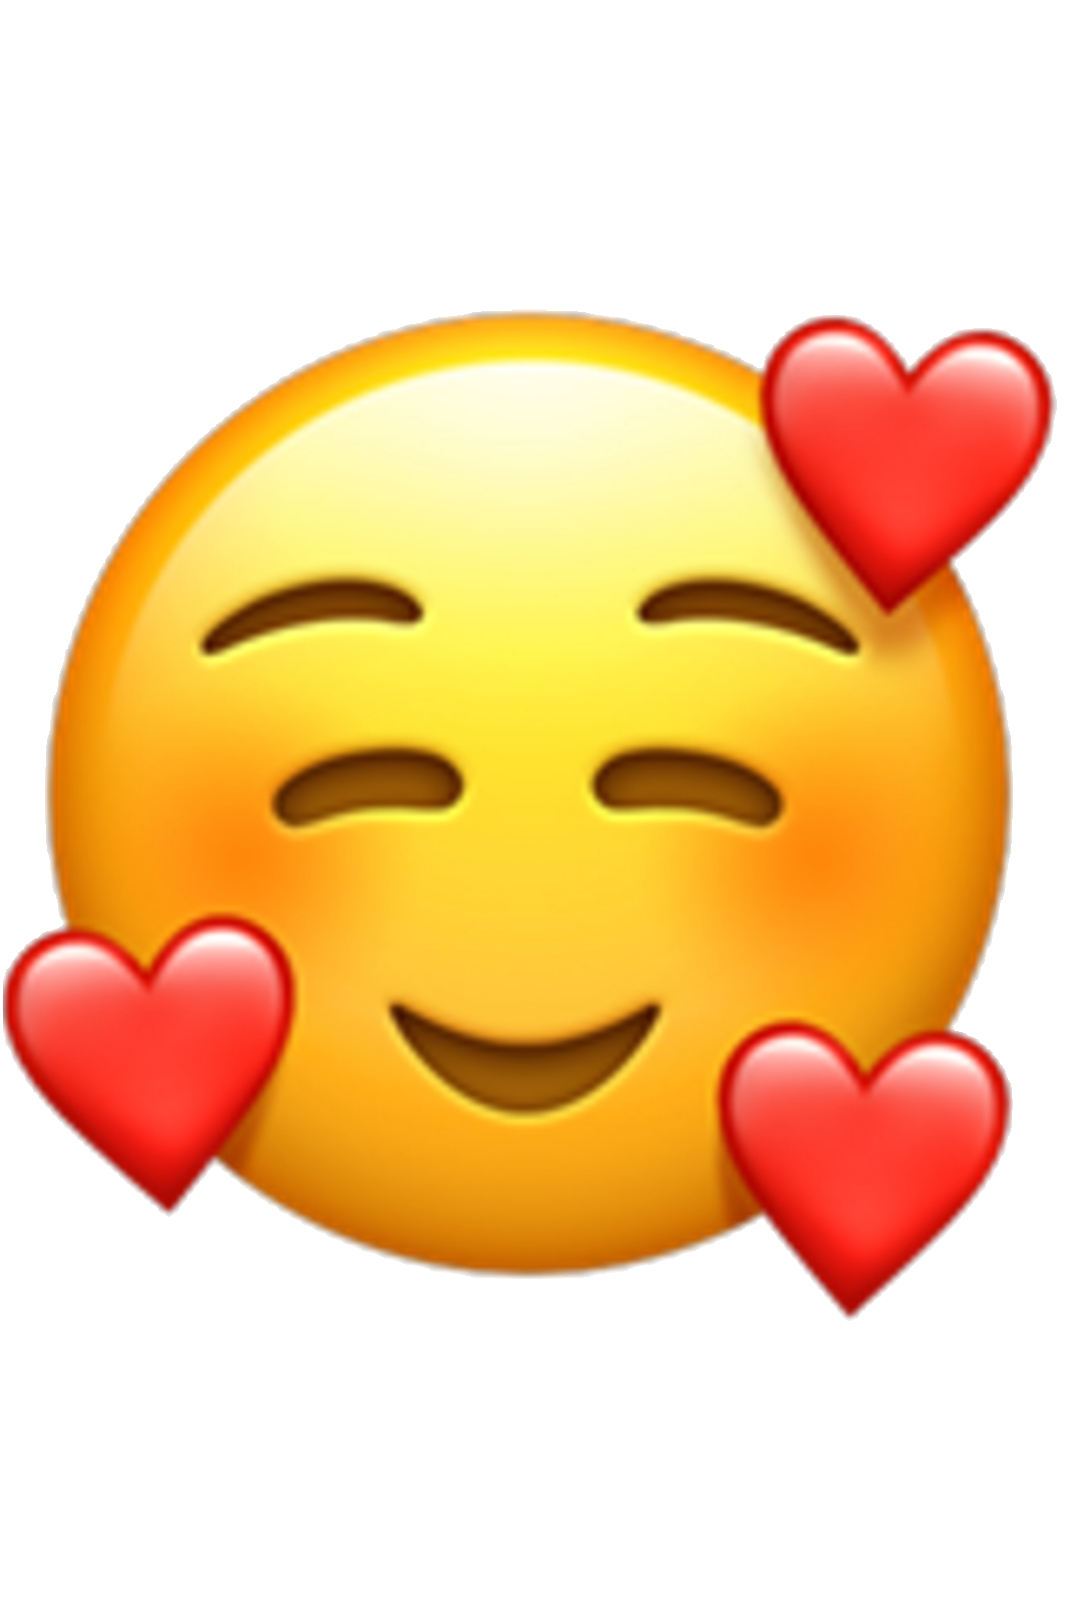 emoji love you